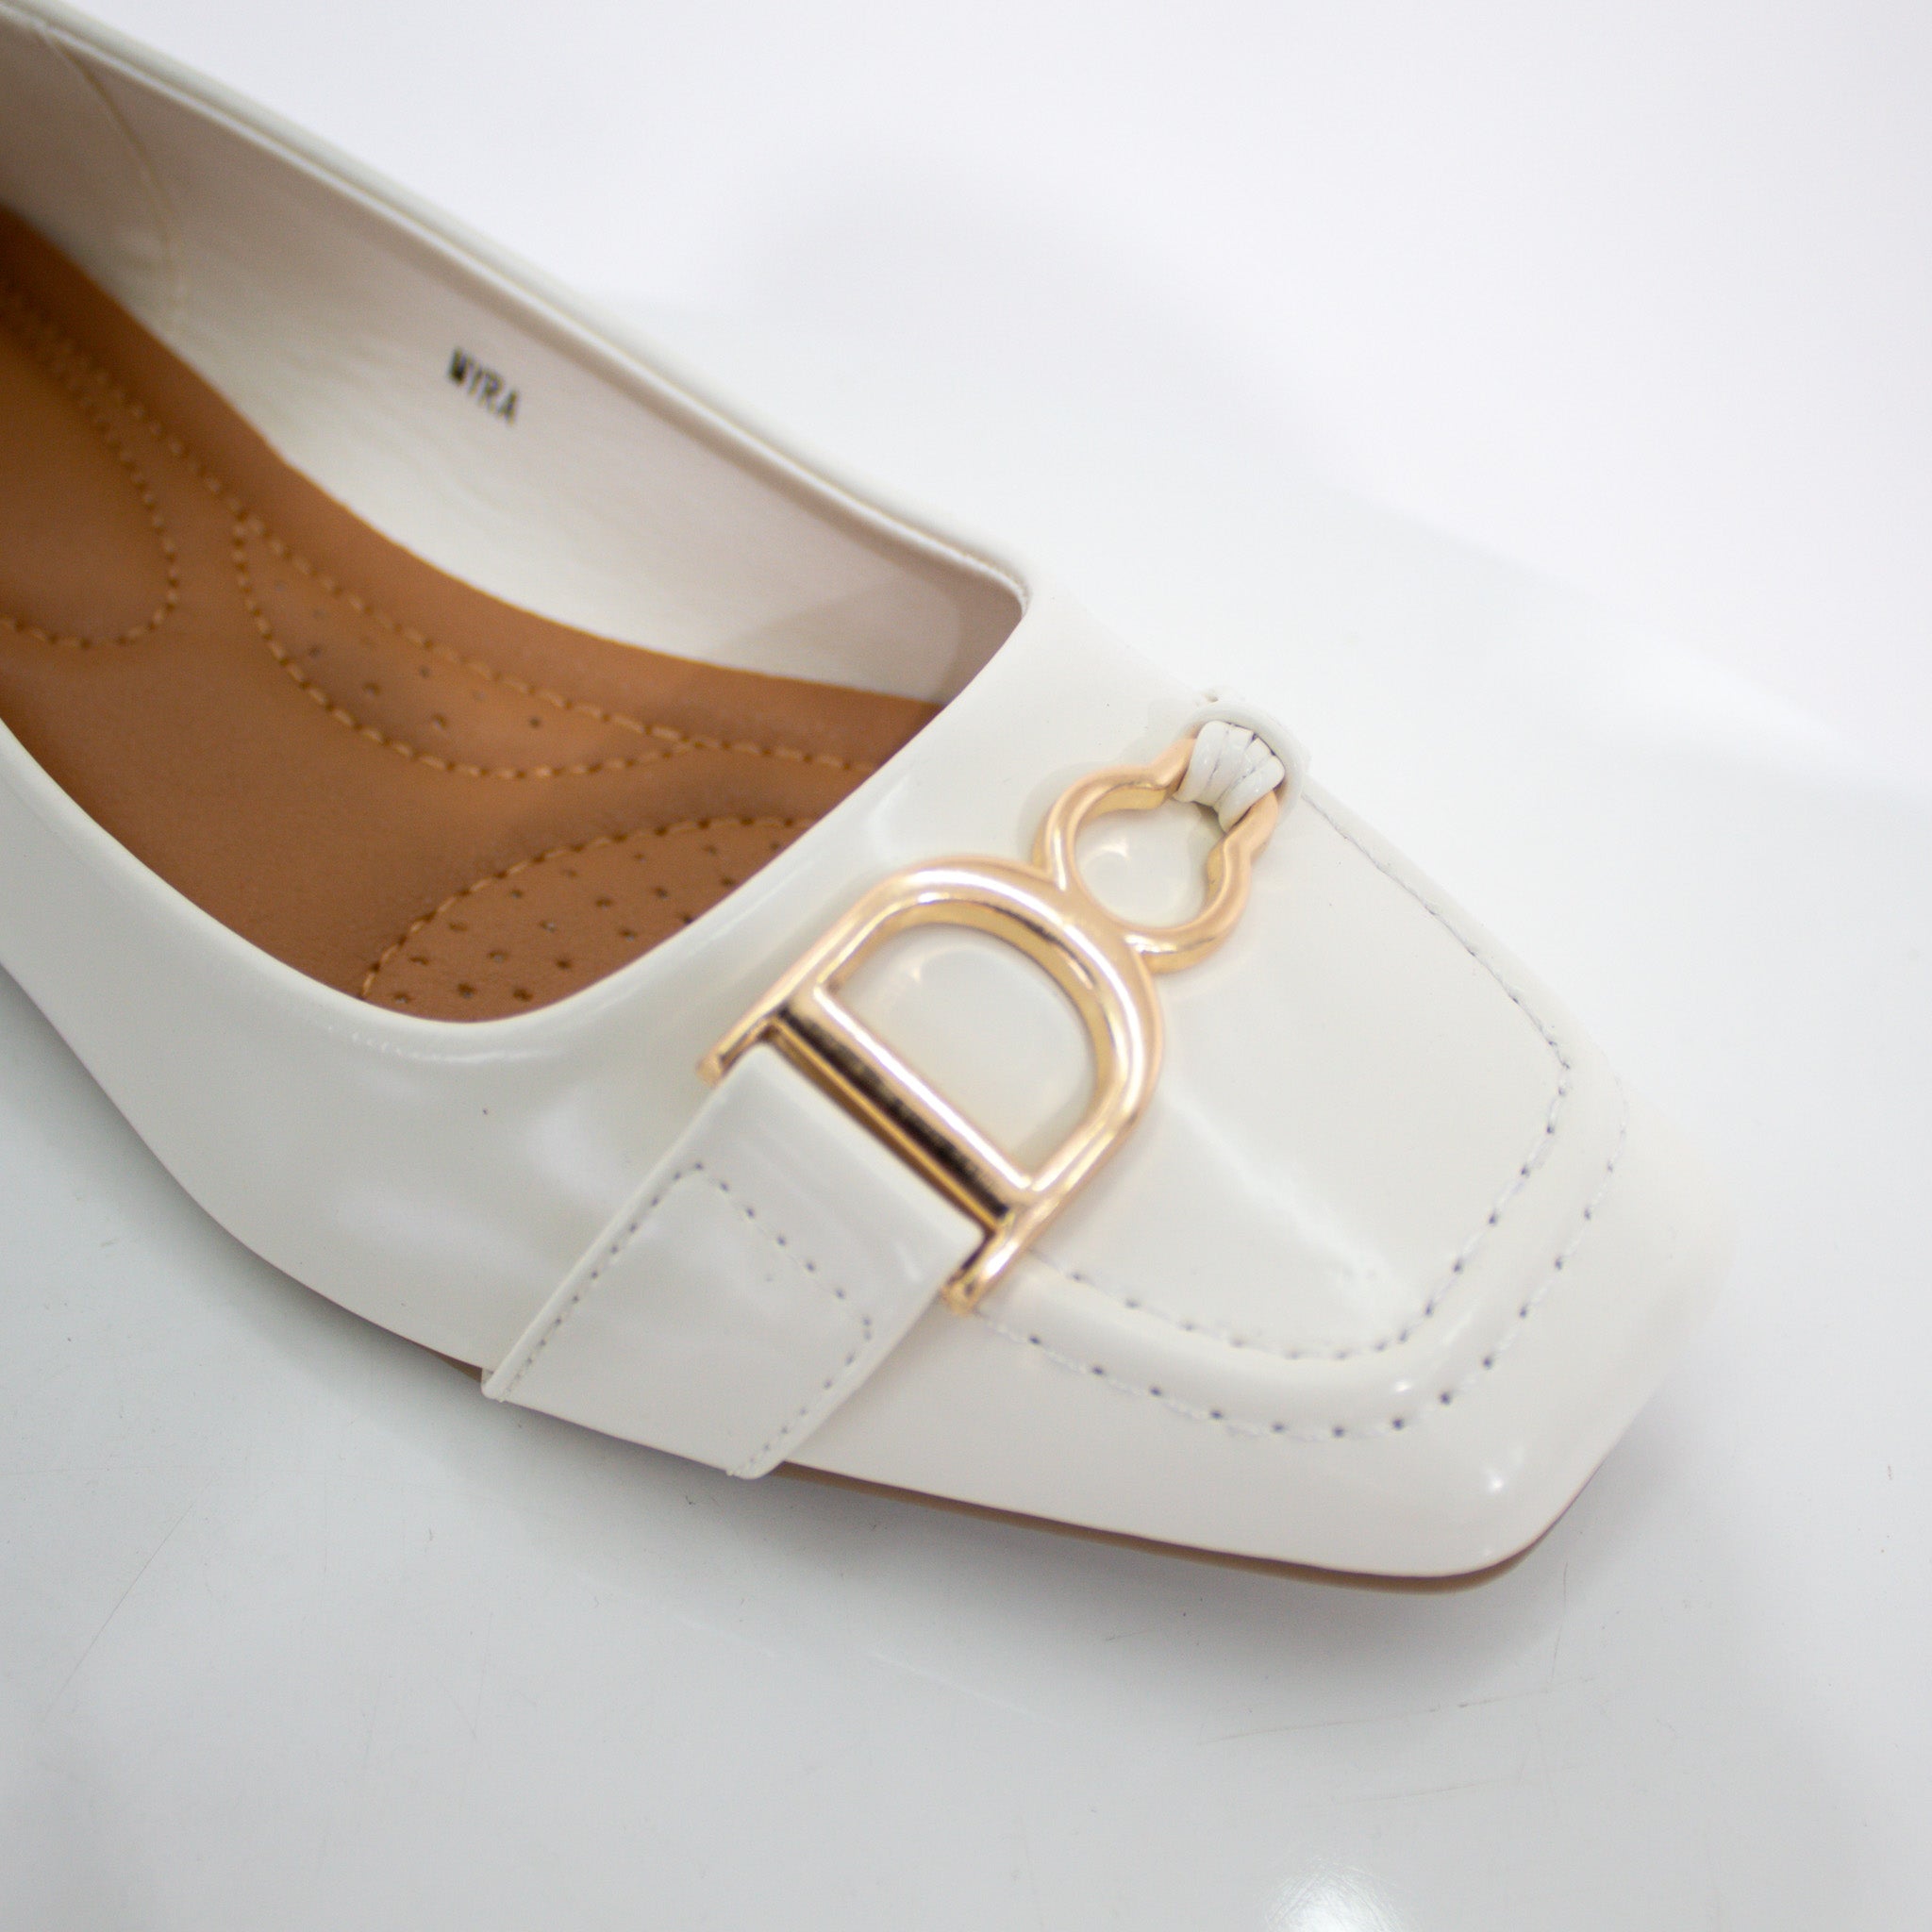 White gold DG trim faux leather pump shoe myra